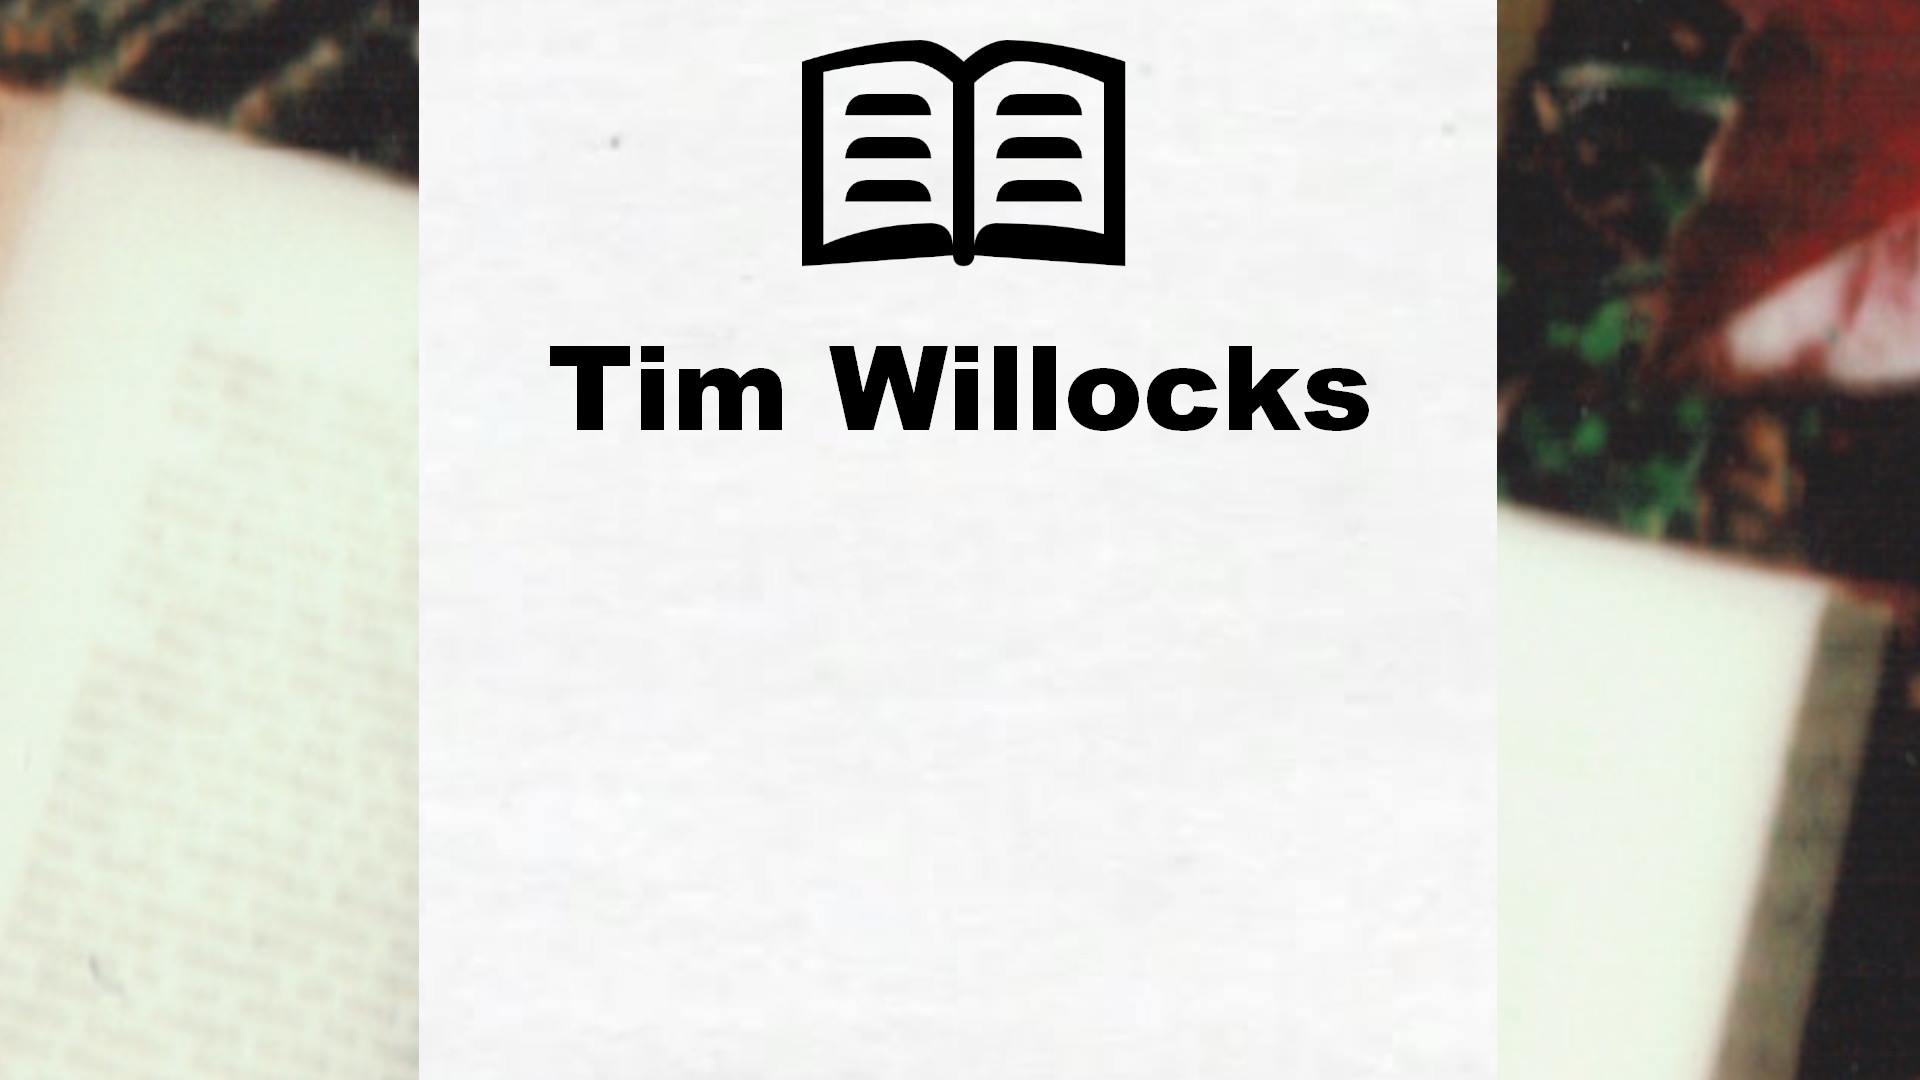 Livres de Tim Willocks